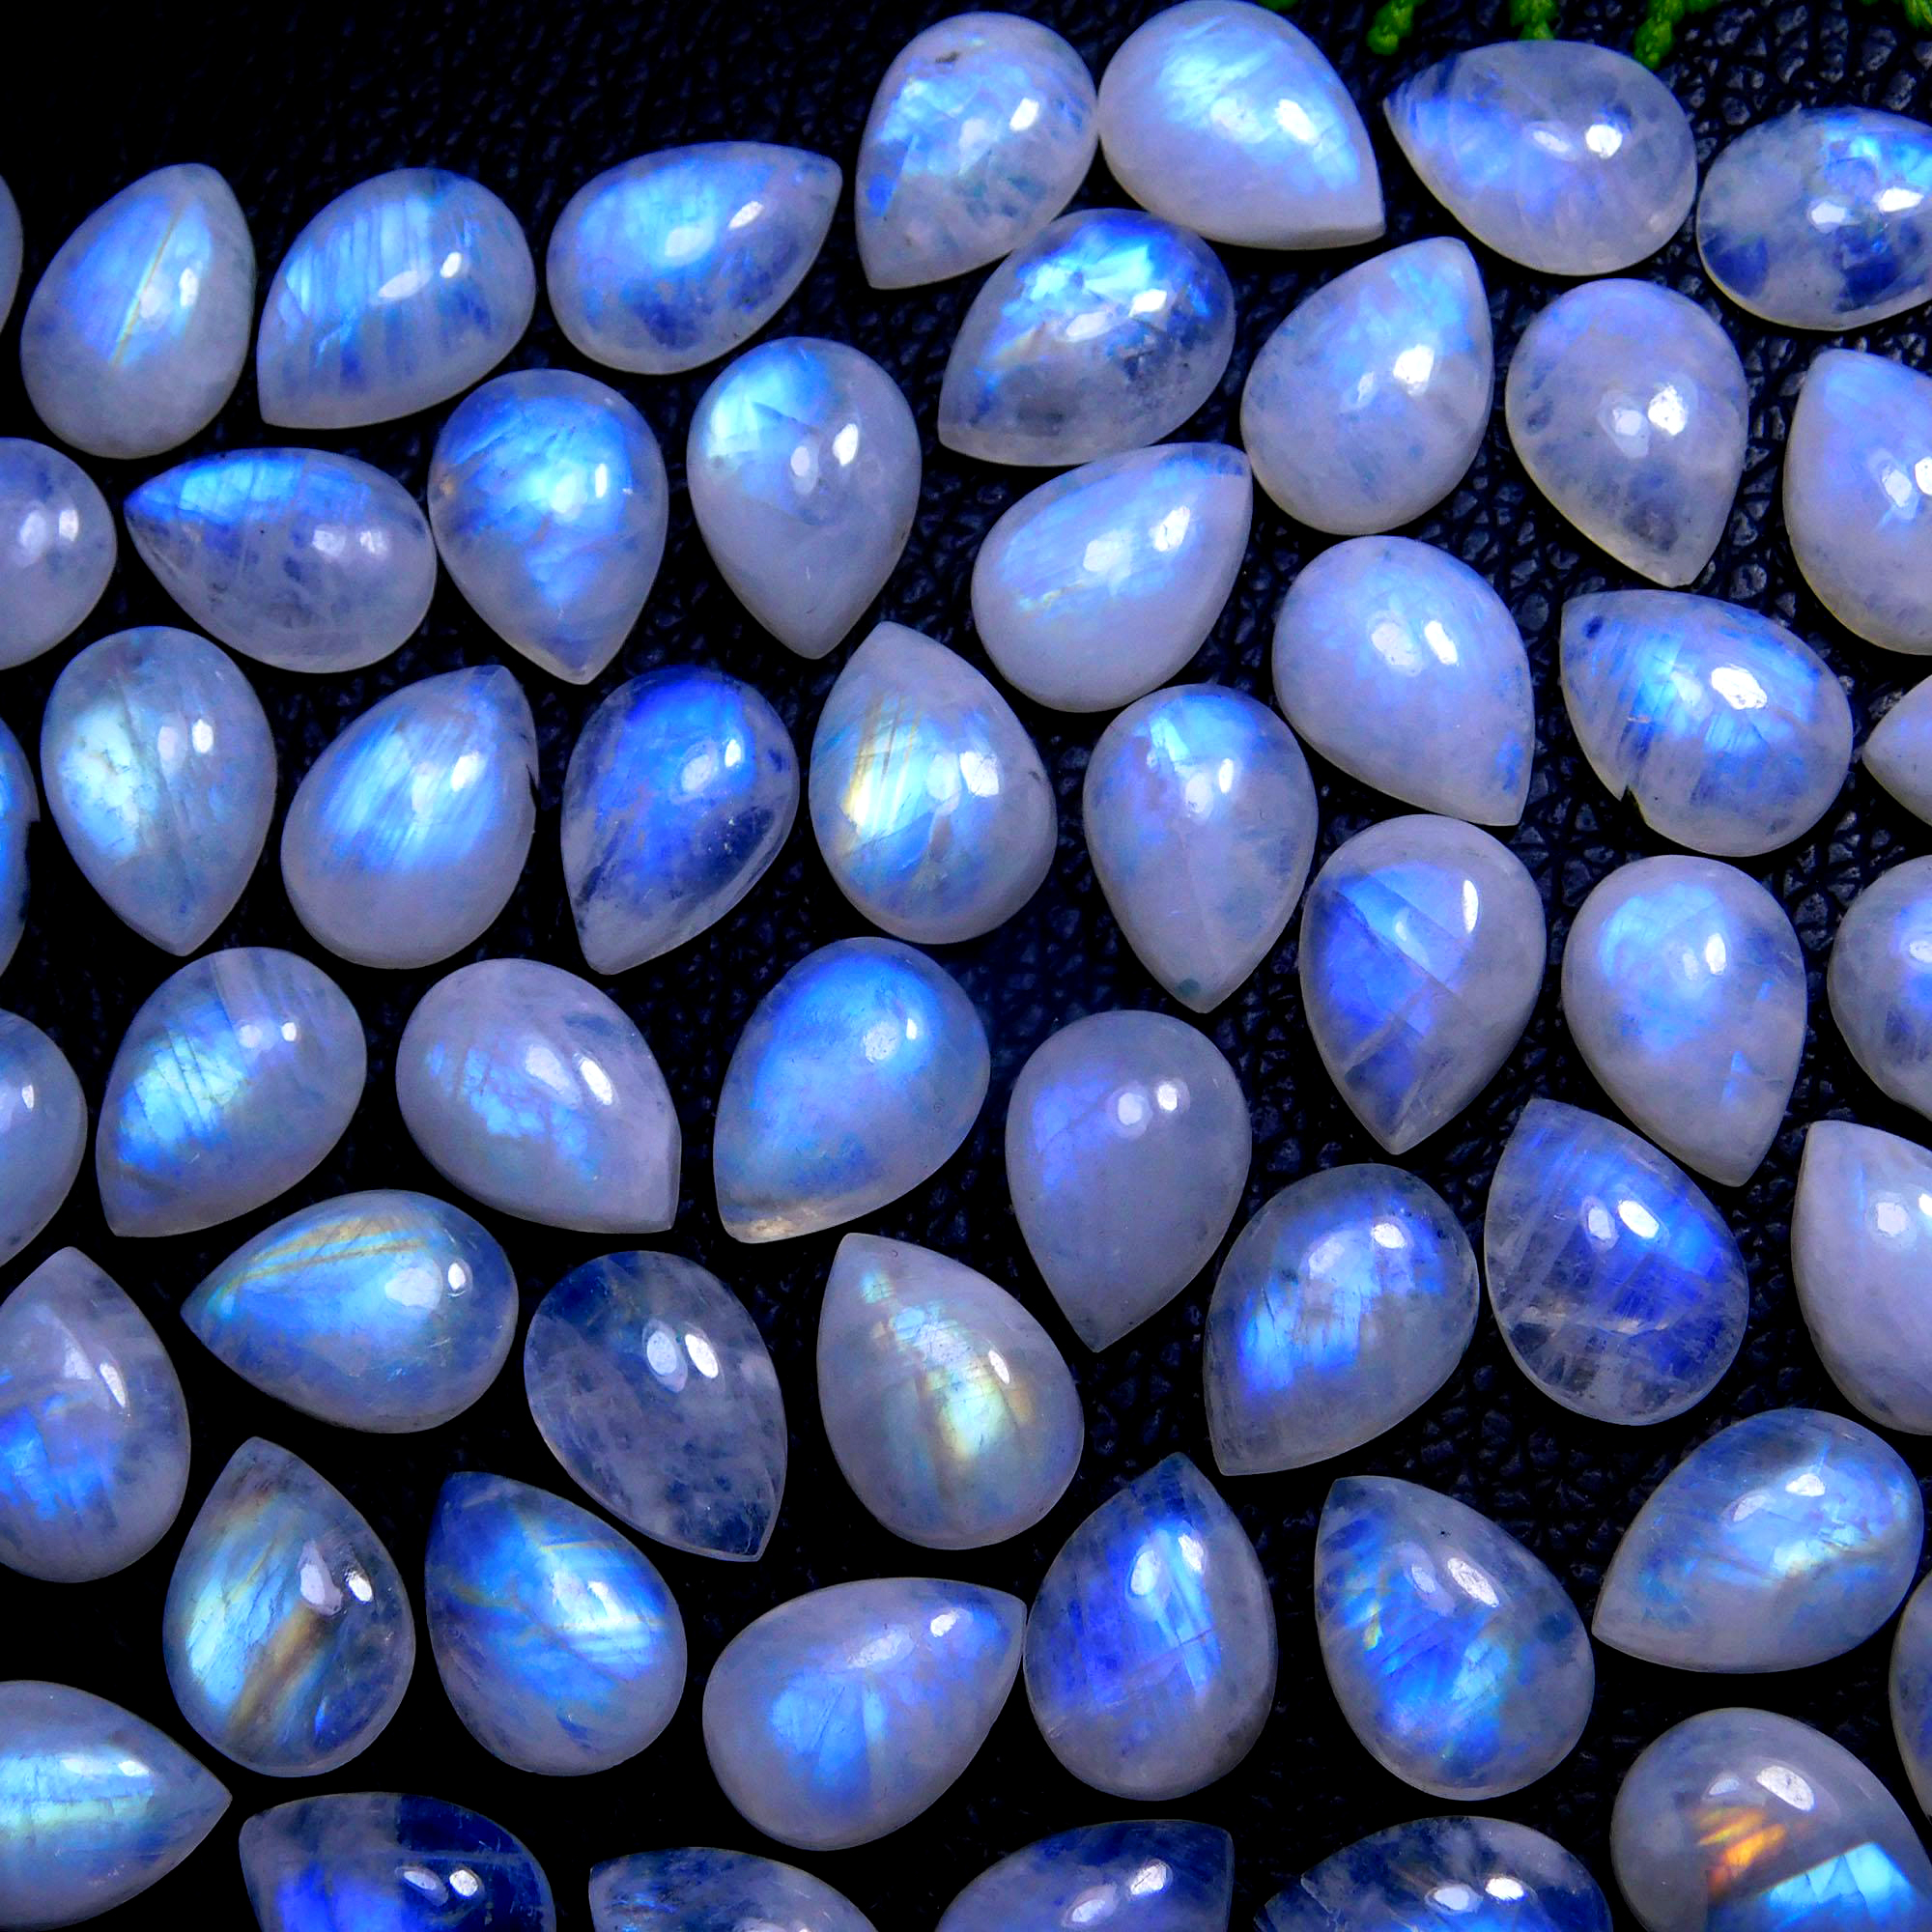 25Pcs 203Cts Natural Rainbow Moonstone Pear Shape Blue Fire Cabochon Lot Semi Precious Loose Gemstone Jewelry Supplies Crystal 16X12mm #9873